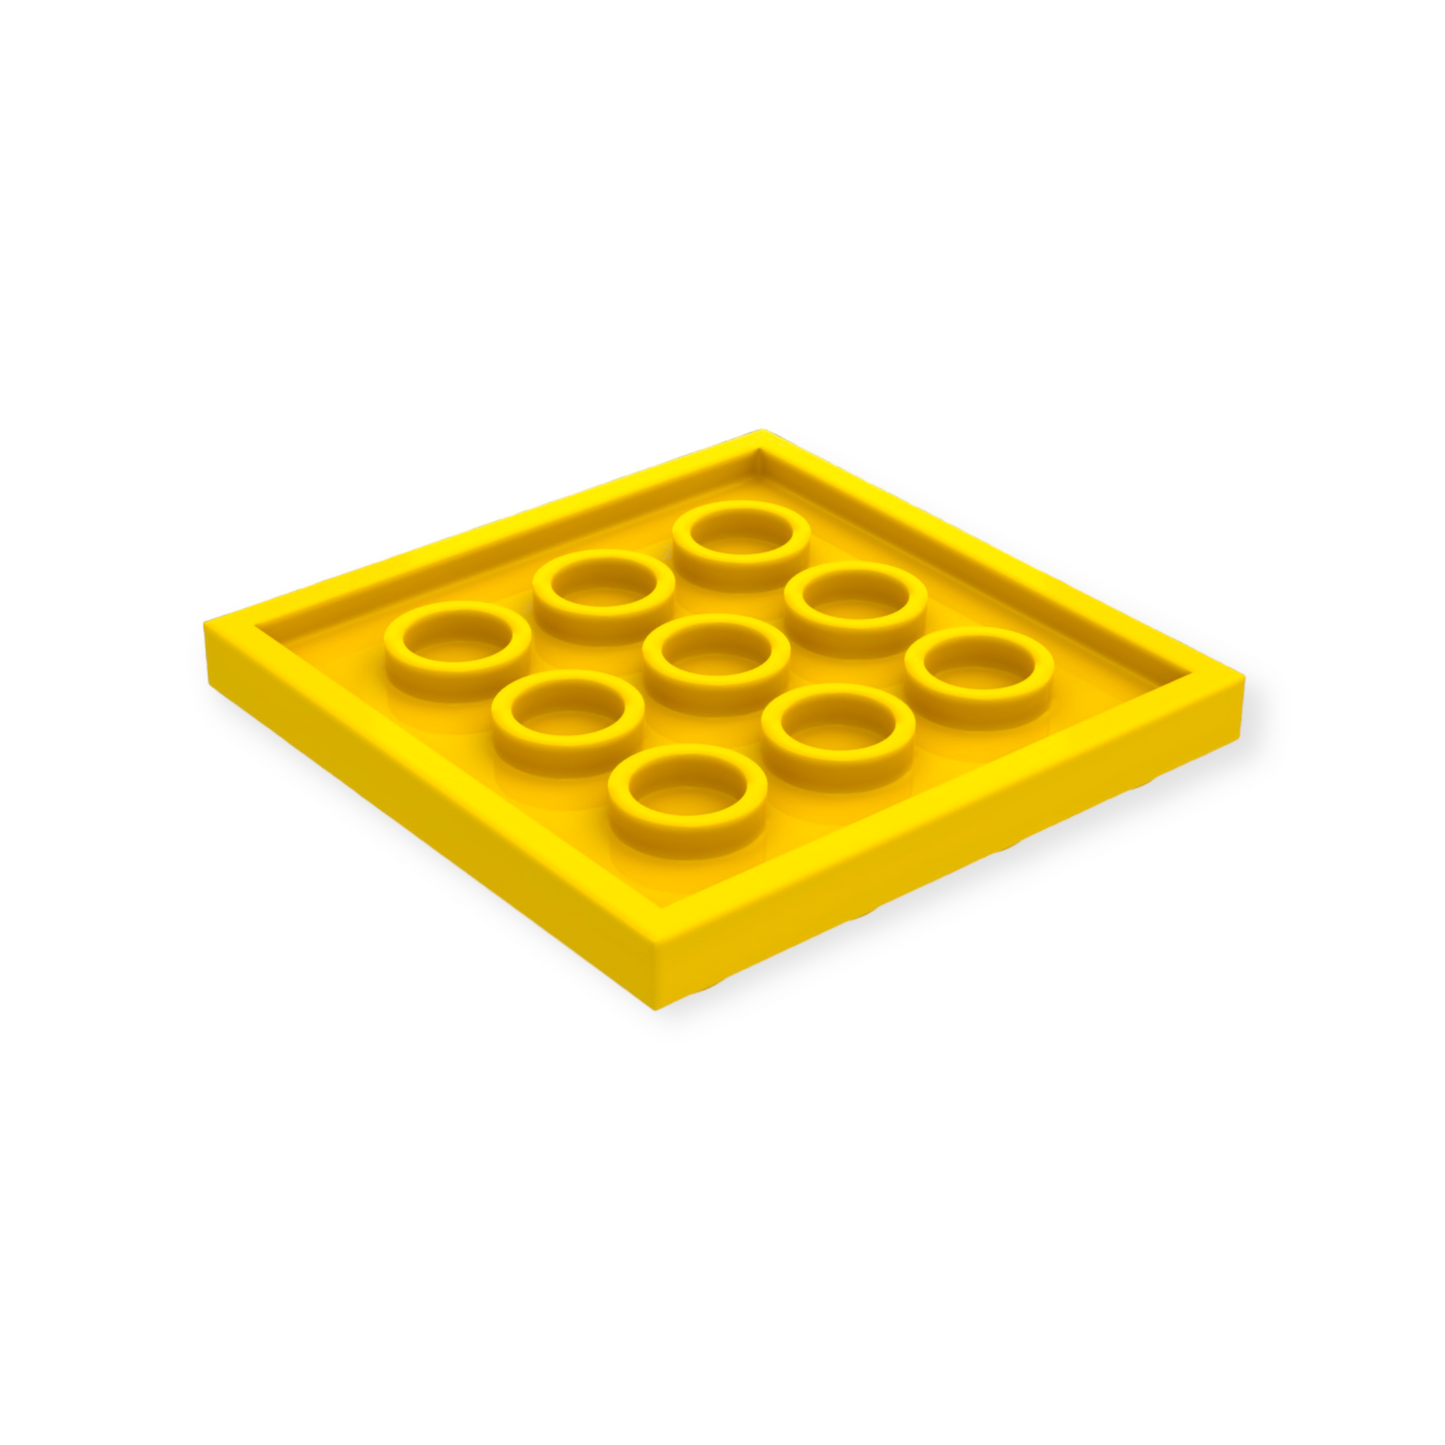 LEGO Plate 4x4 - Yellow